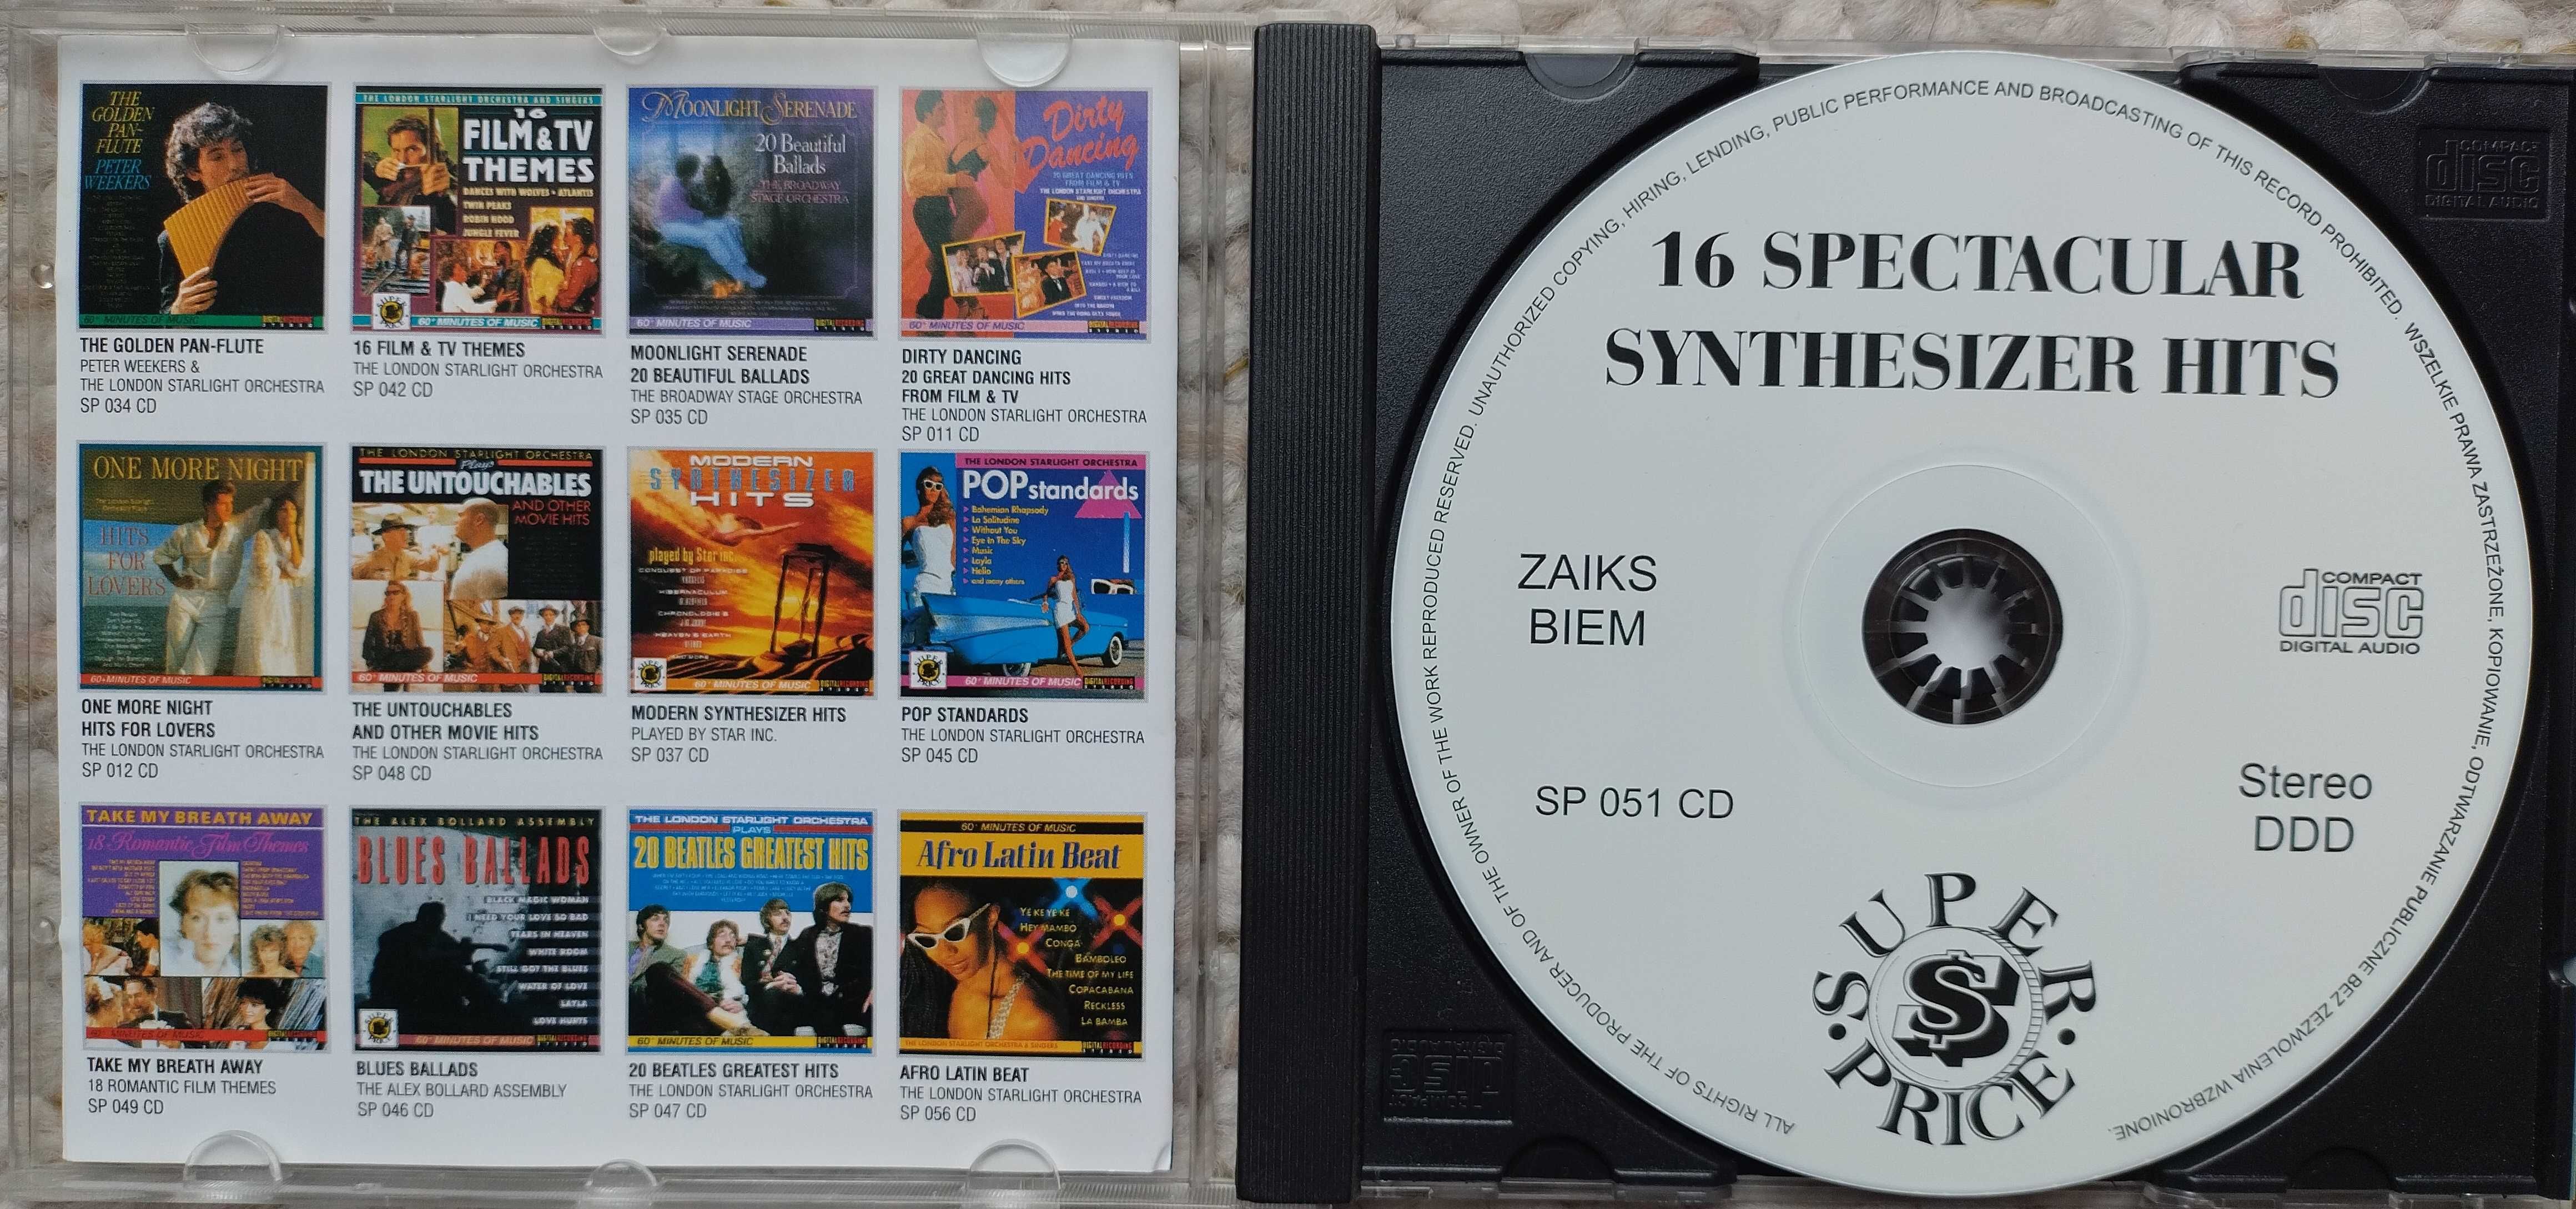 płyta CD muzyka filmowa: "16 Spectacular Synthesizer Hits”